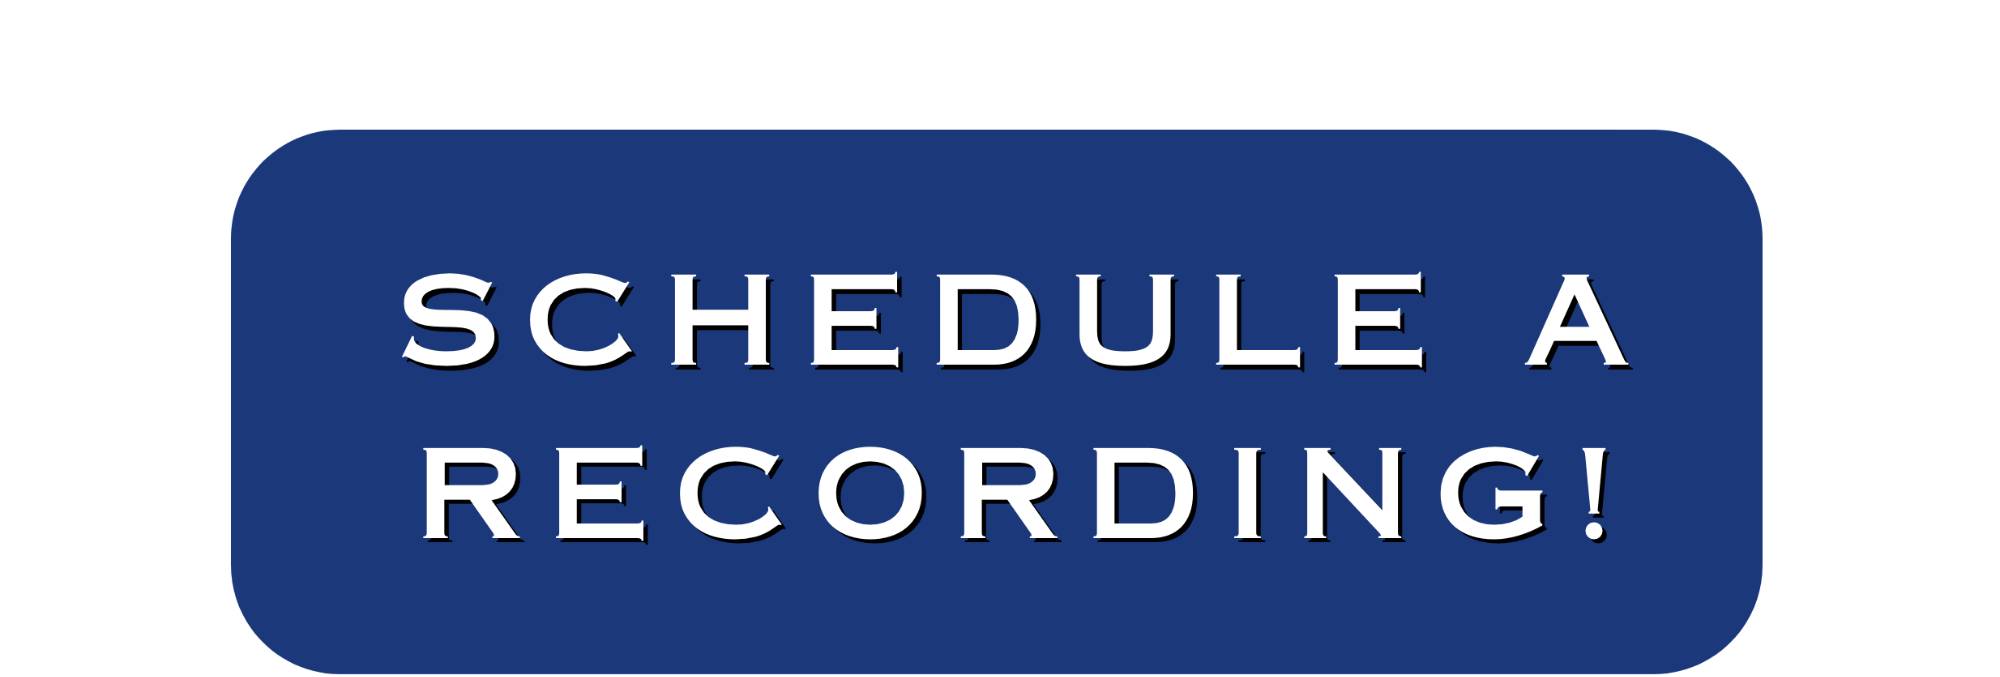 schedule a recording